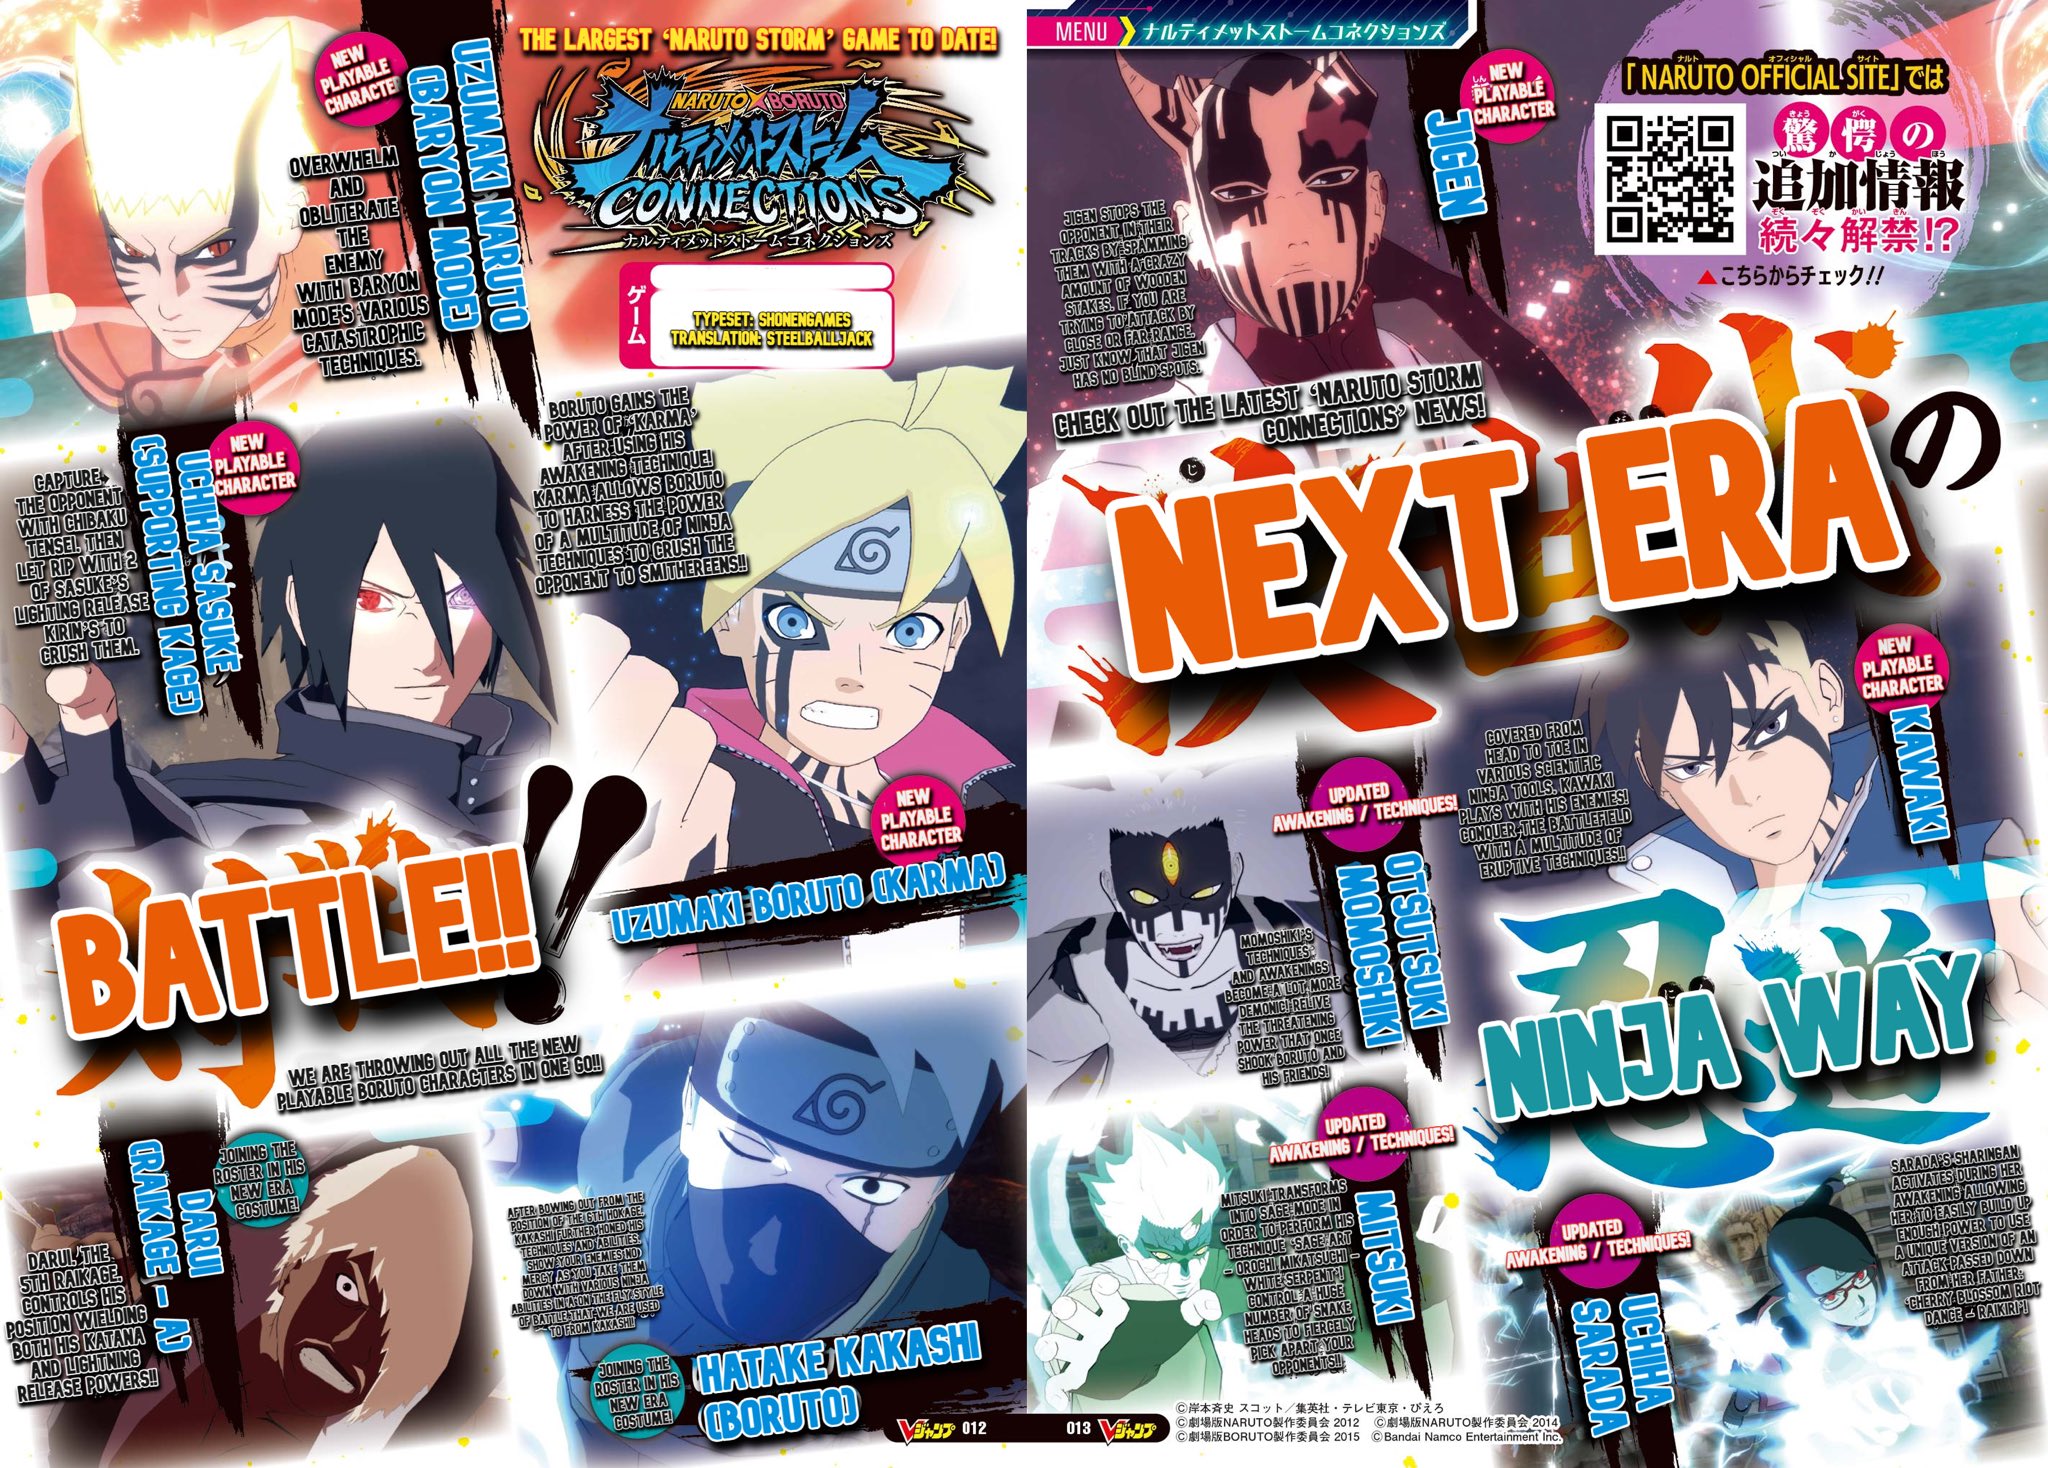 PS360HD2 (Anime Games News) on X: Naruto x Boruto Ultimate Ninja Storm  Connections Vjump Scans Naruto 99 top 5 character poll collaboration.   / X